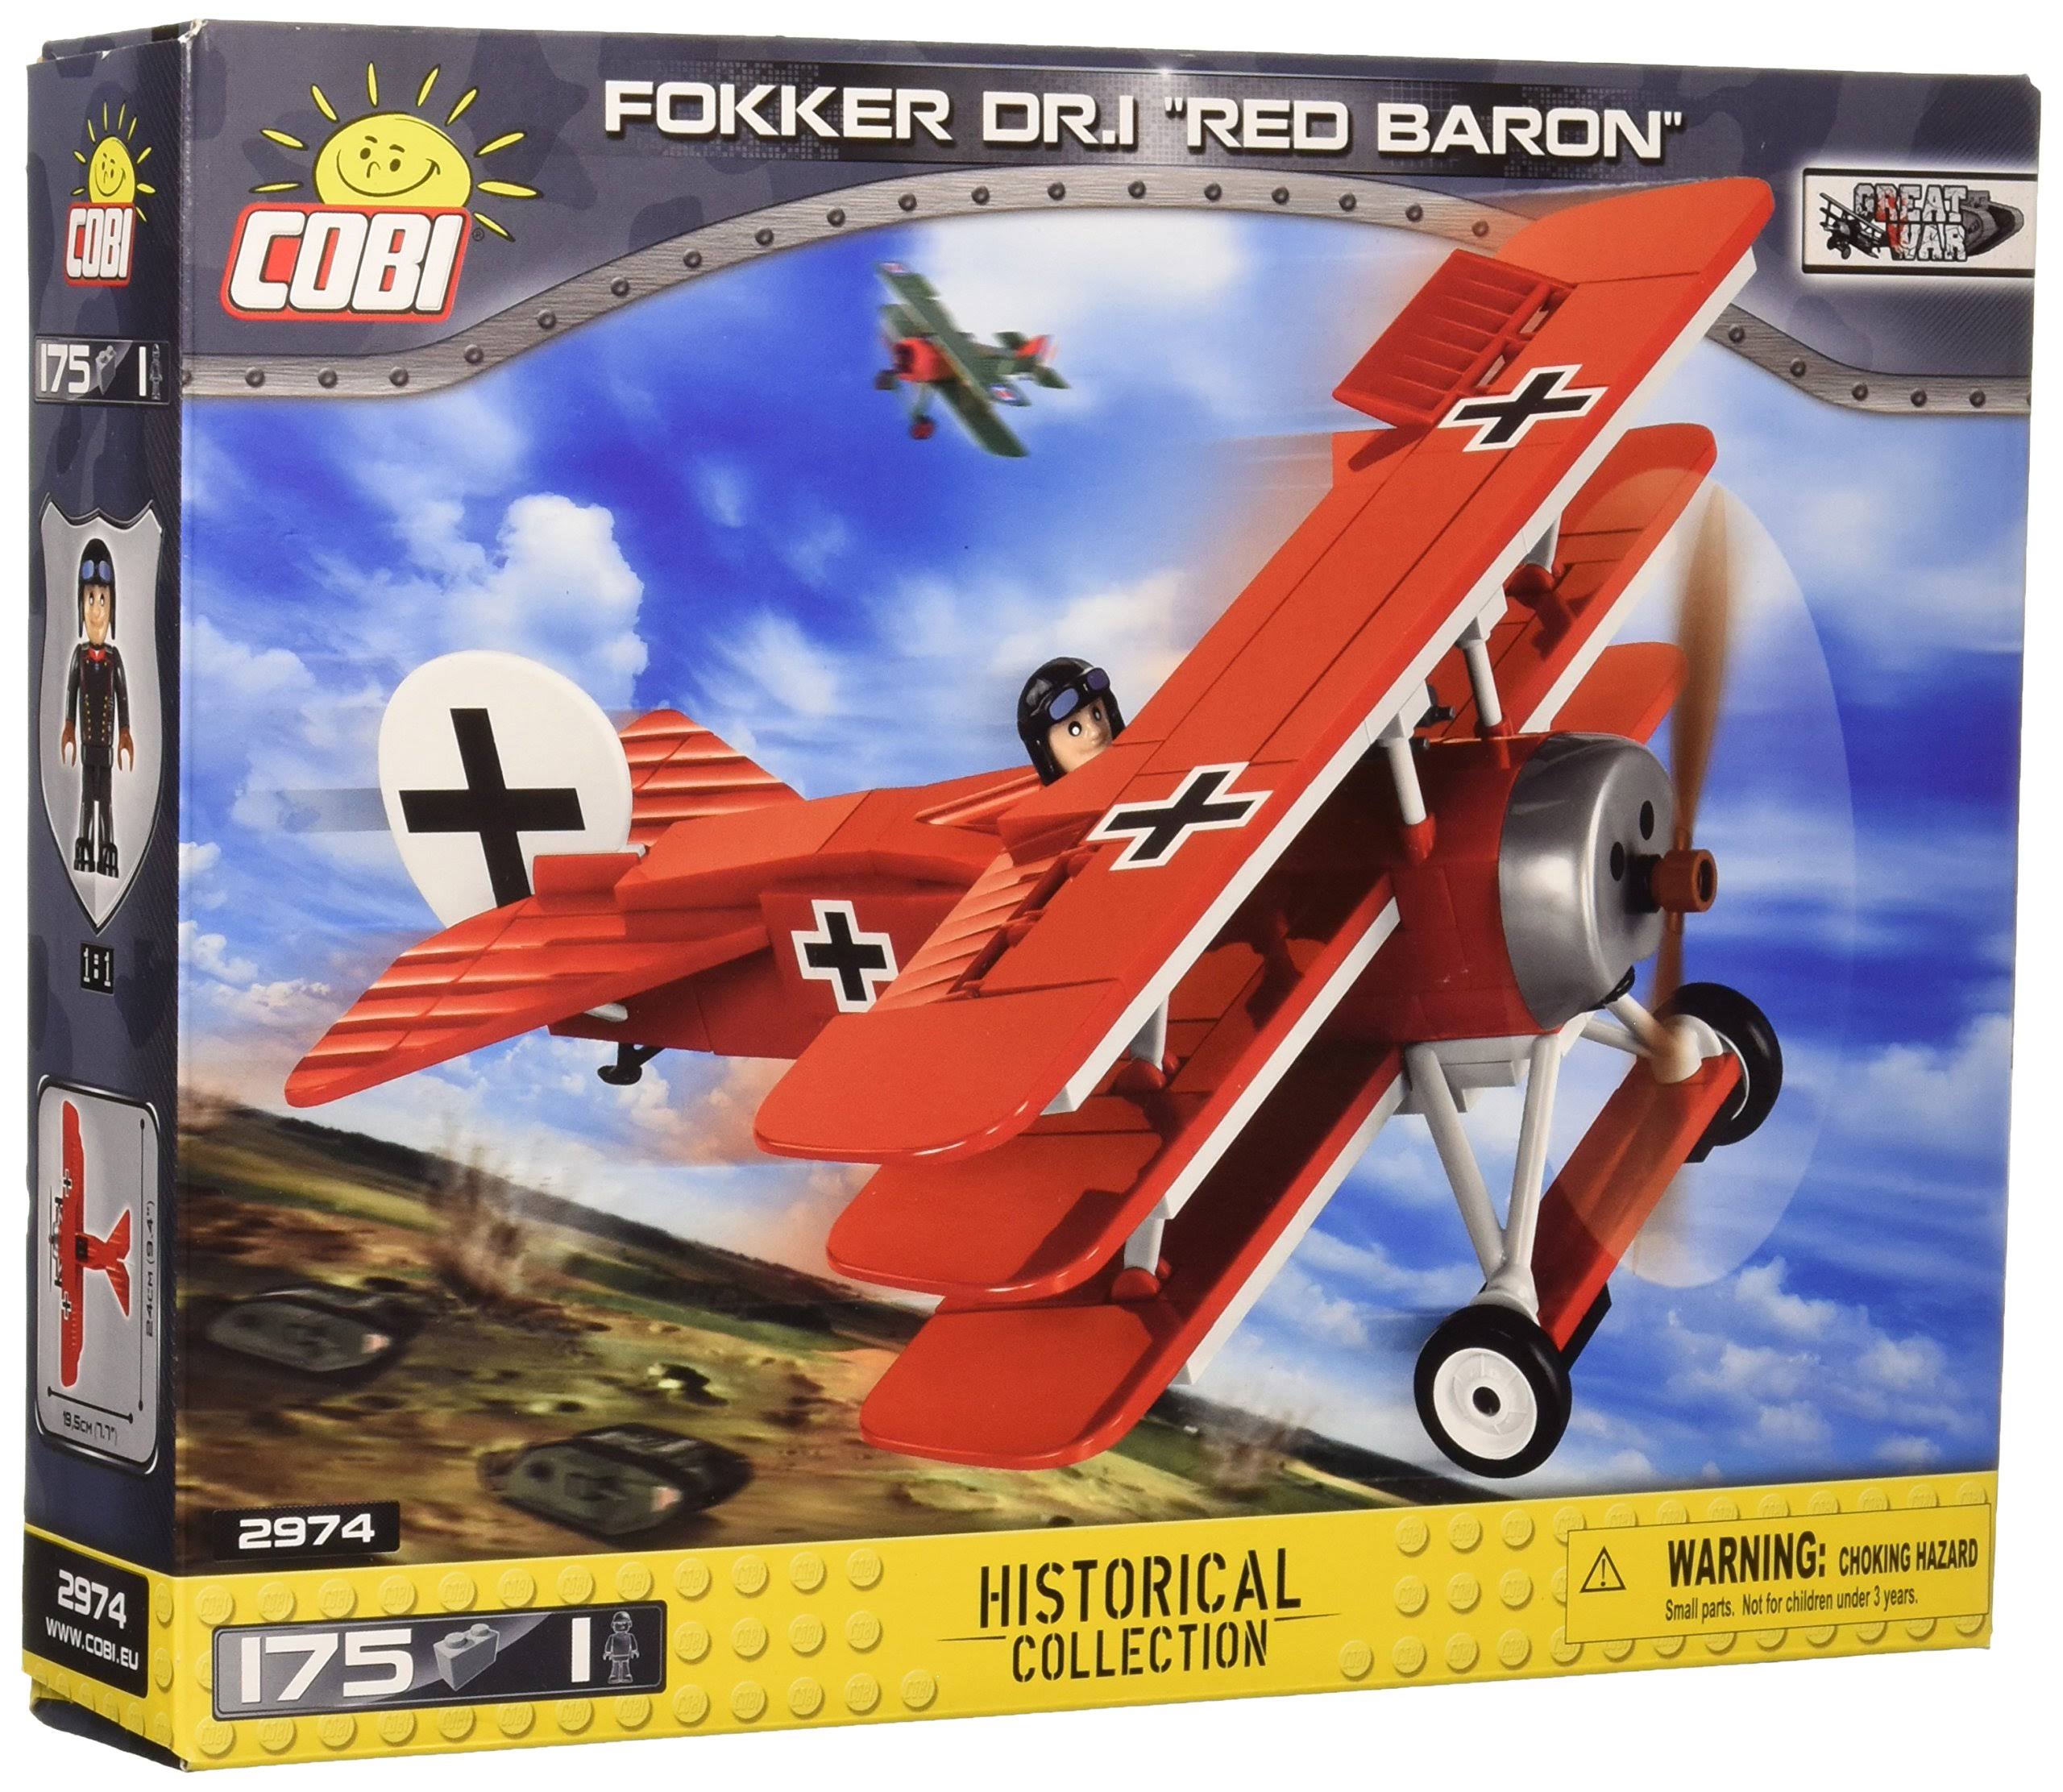 Cobi Small Army Building Kit - Fokker Dr.1 Red Baron, 175pcs